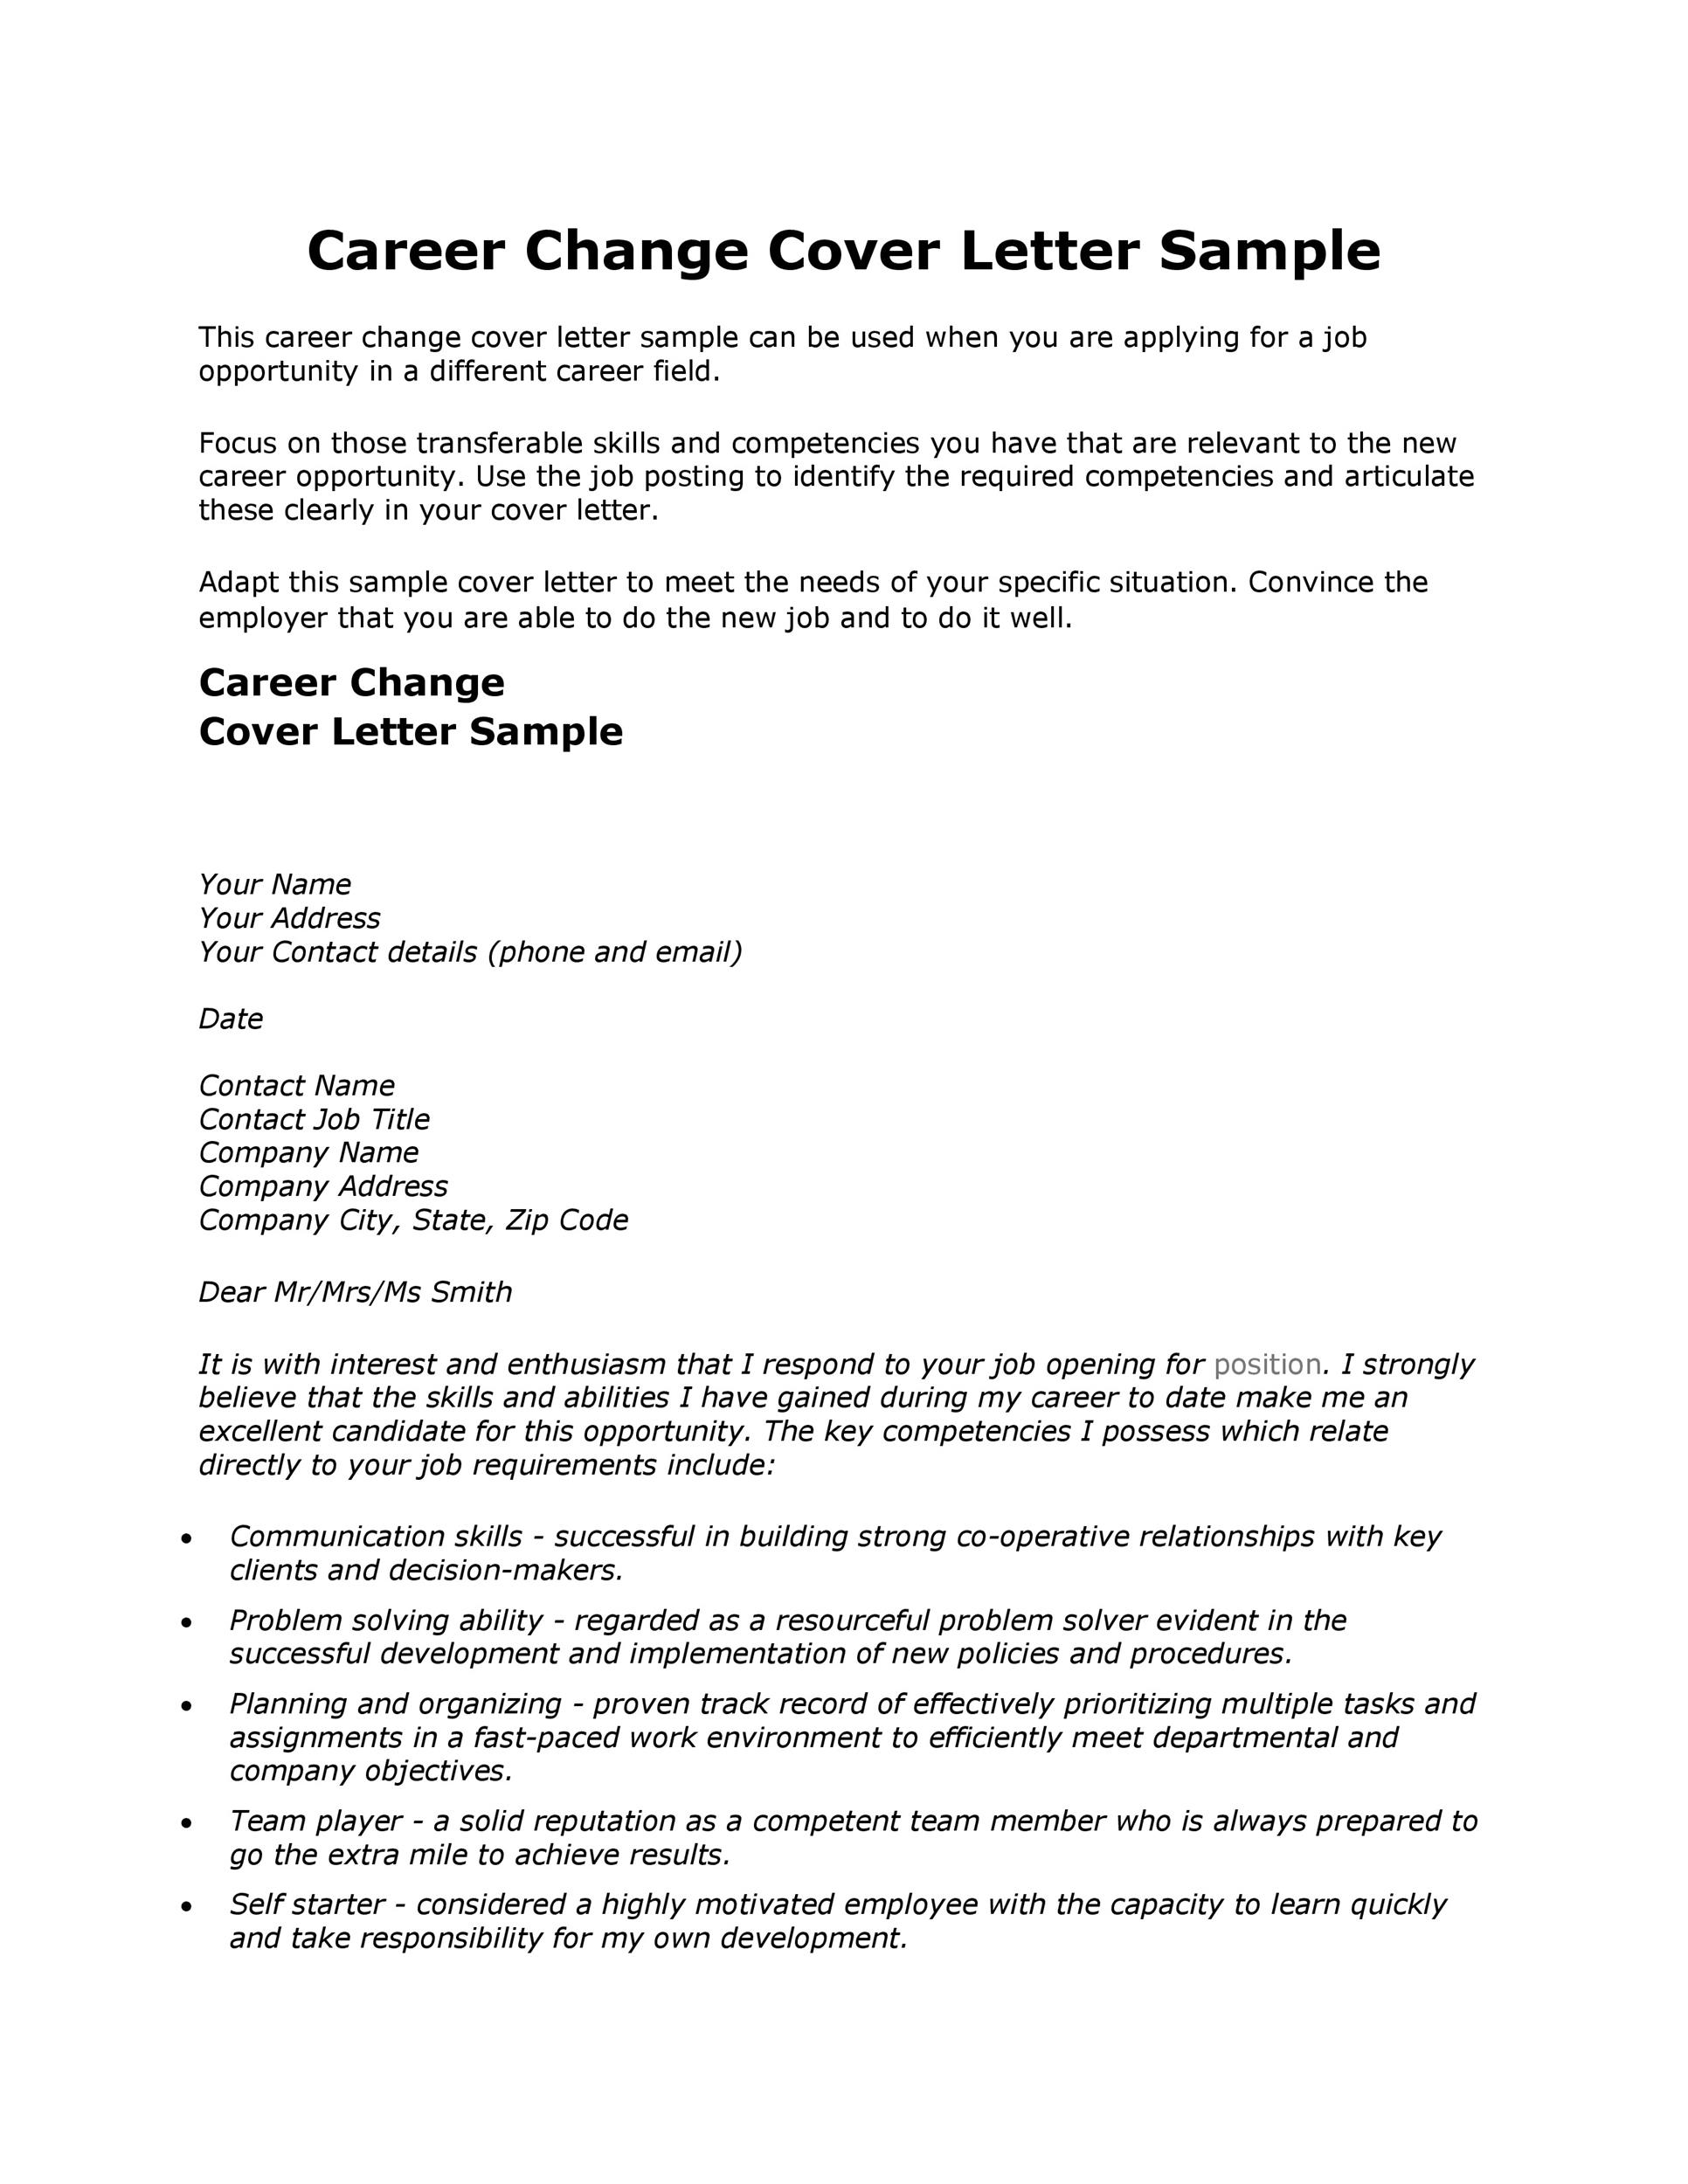 Free career change cover letter 08